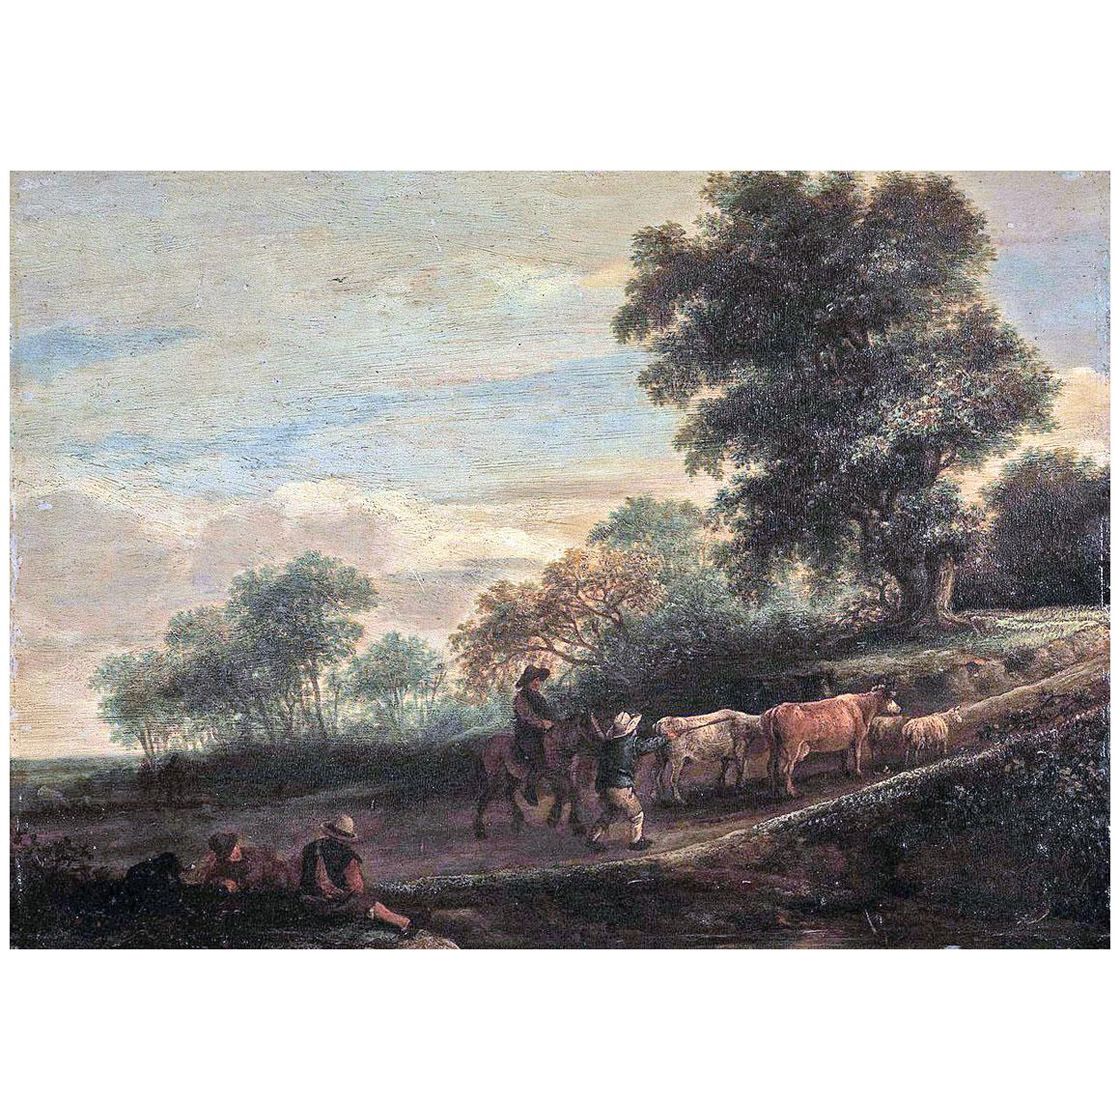 Adriaen van Ostade. Landscape with Shepherds and Cattle. Hermitage Museum